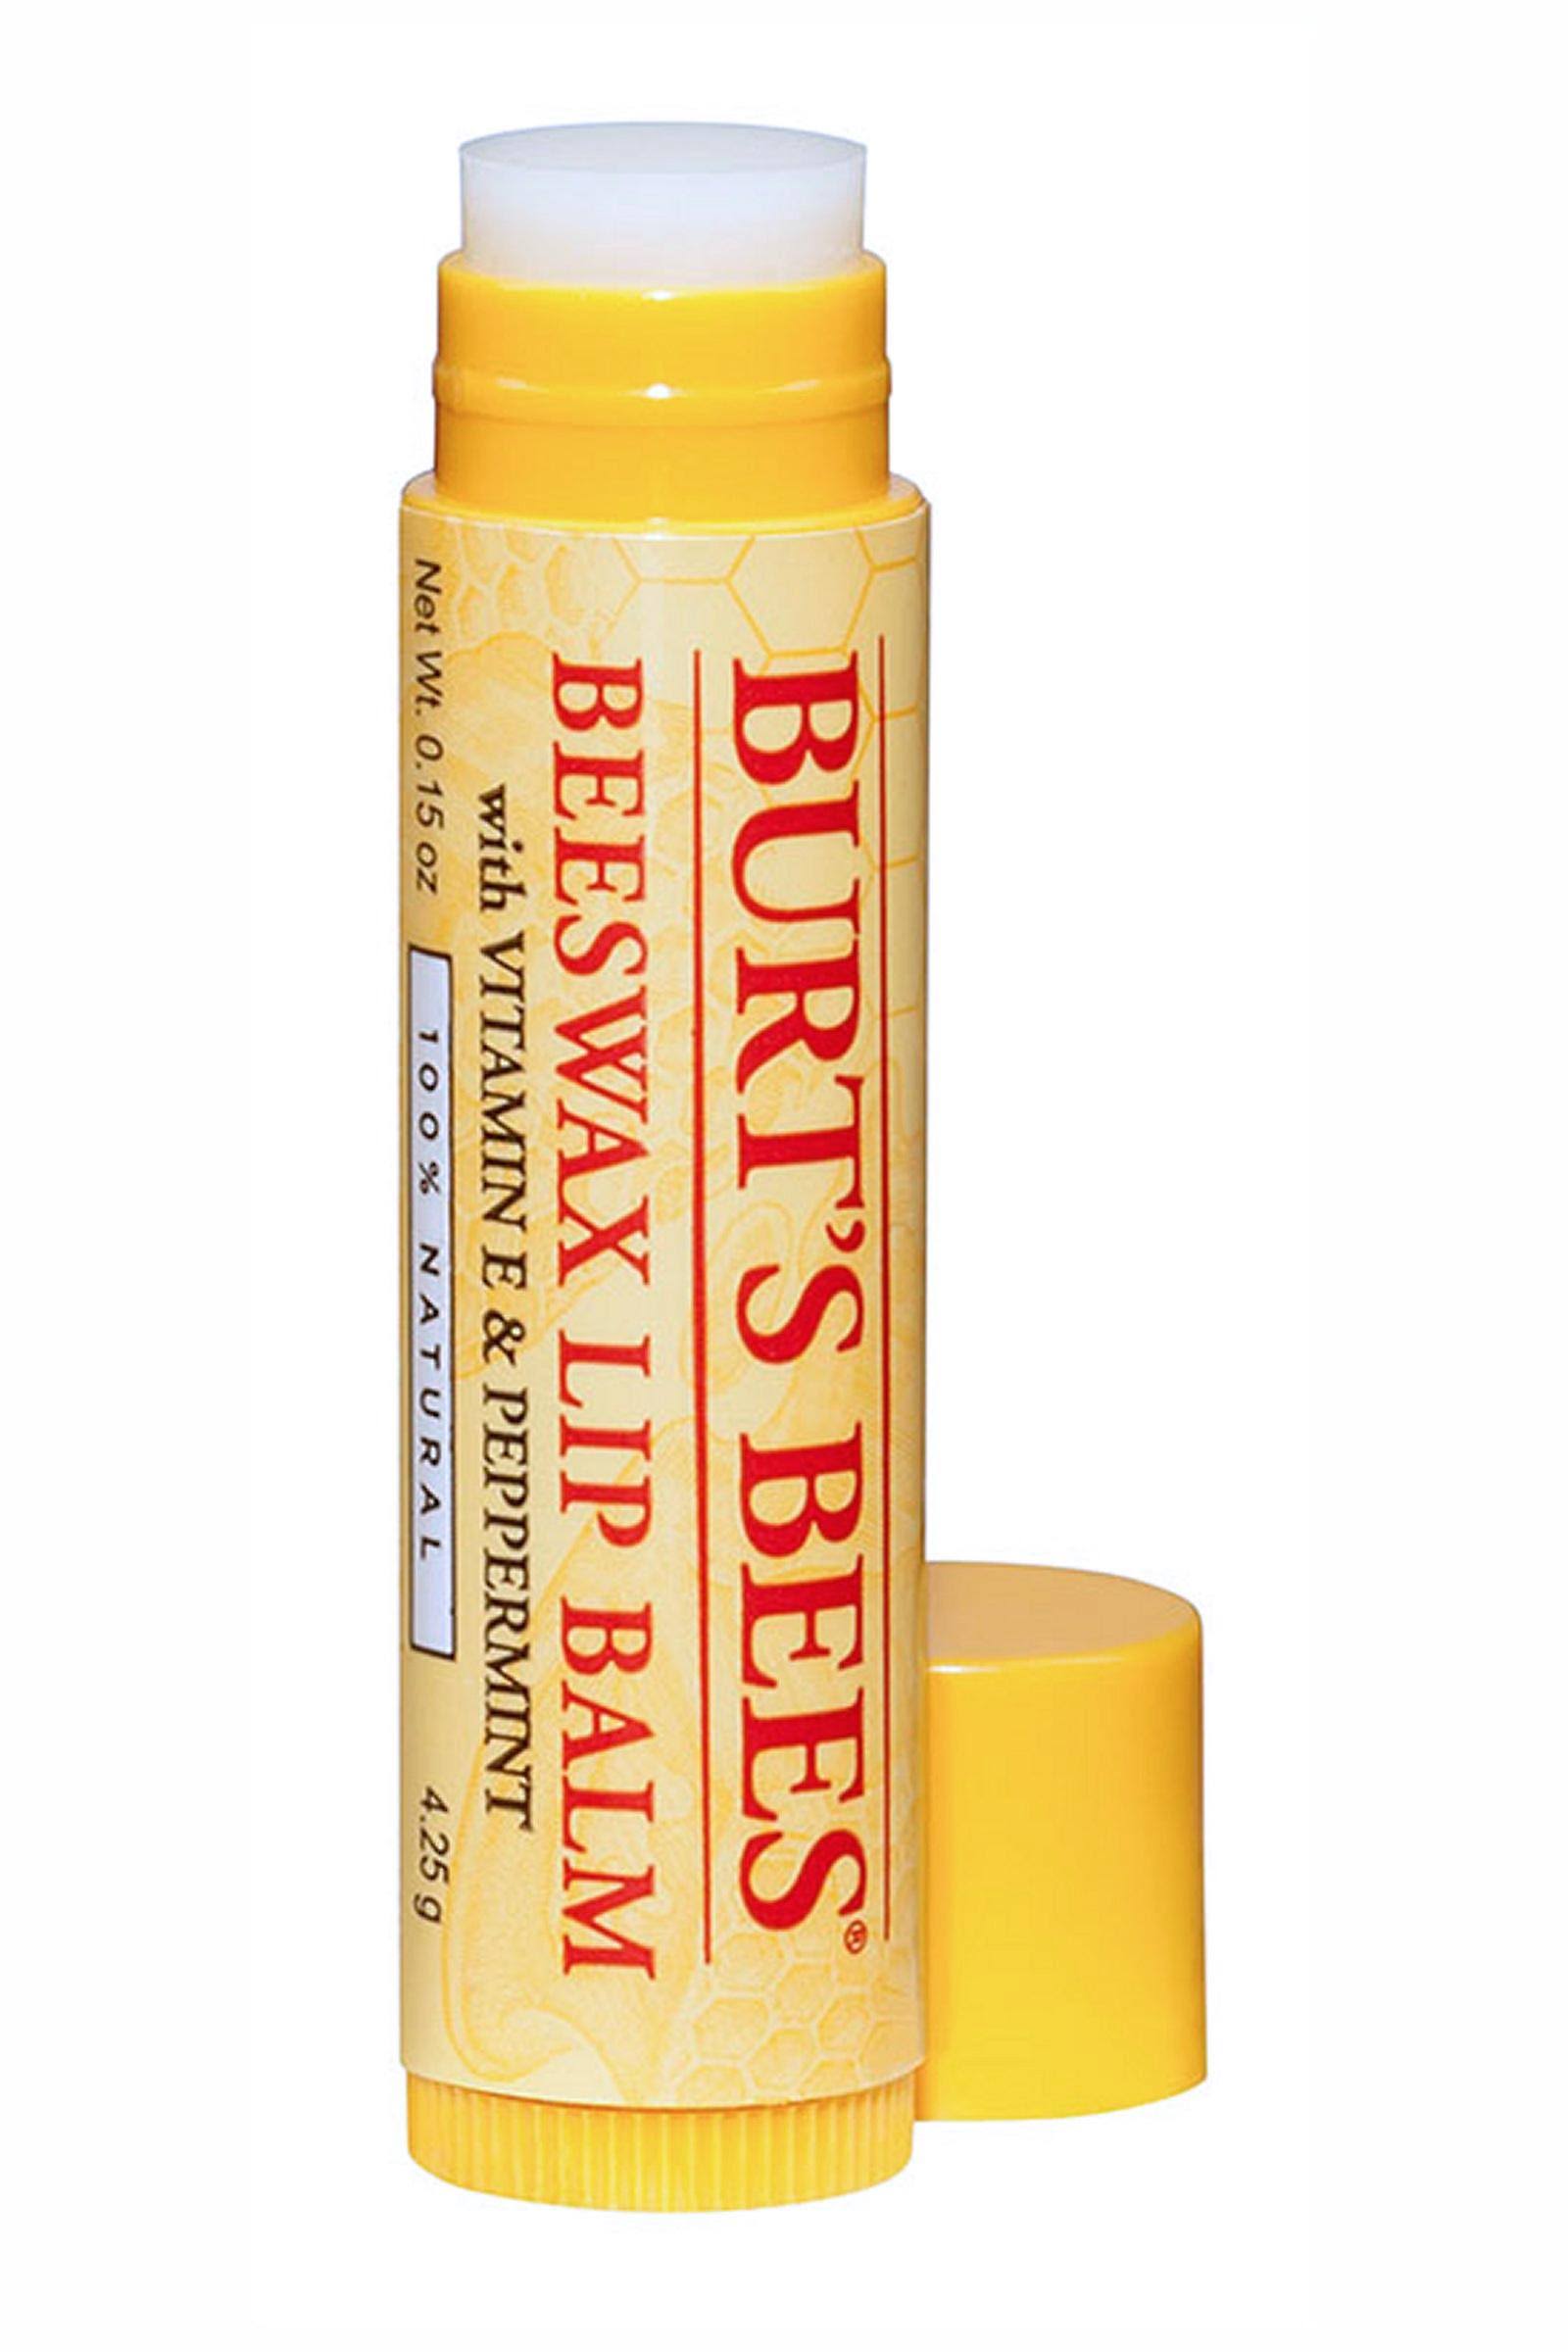 Burt's Bees Beeswax Lip Balm - 4.25g